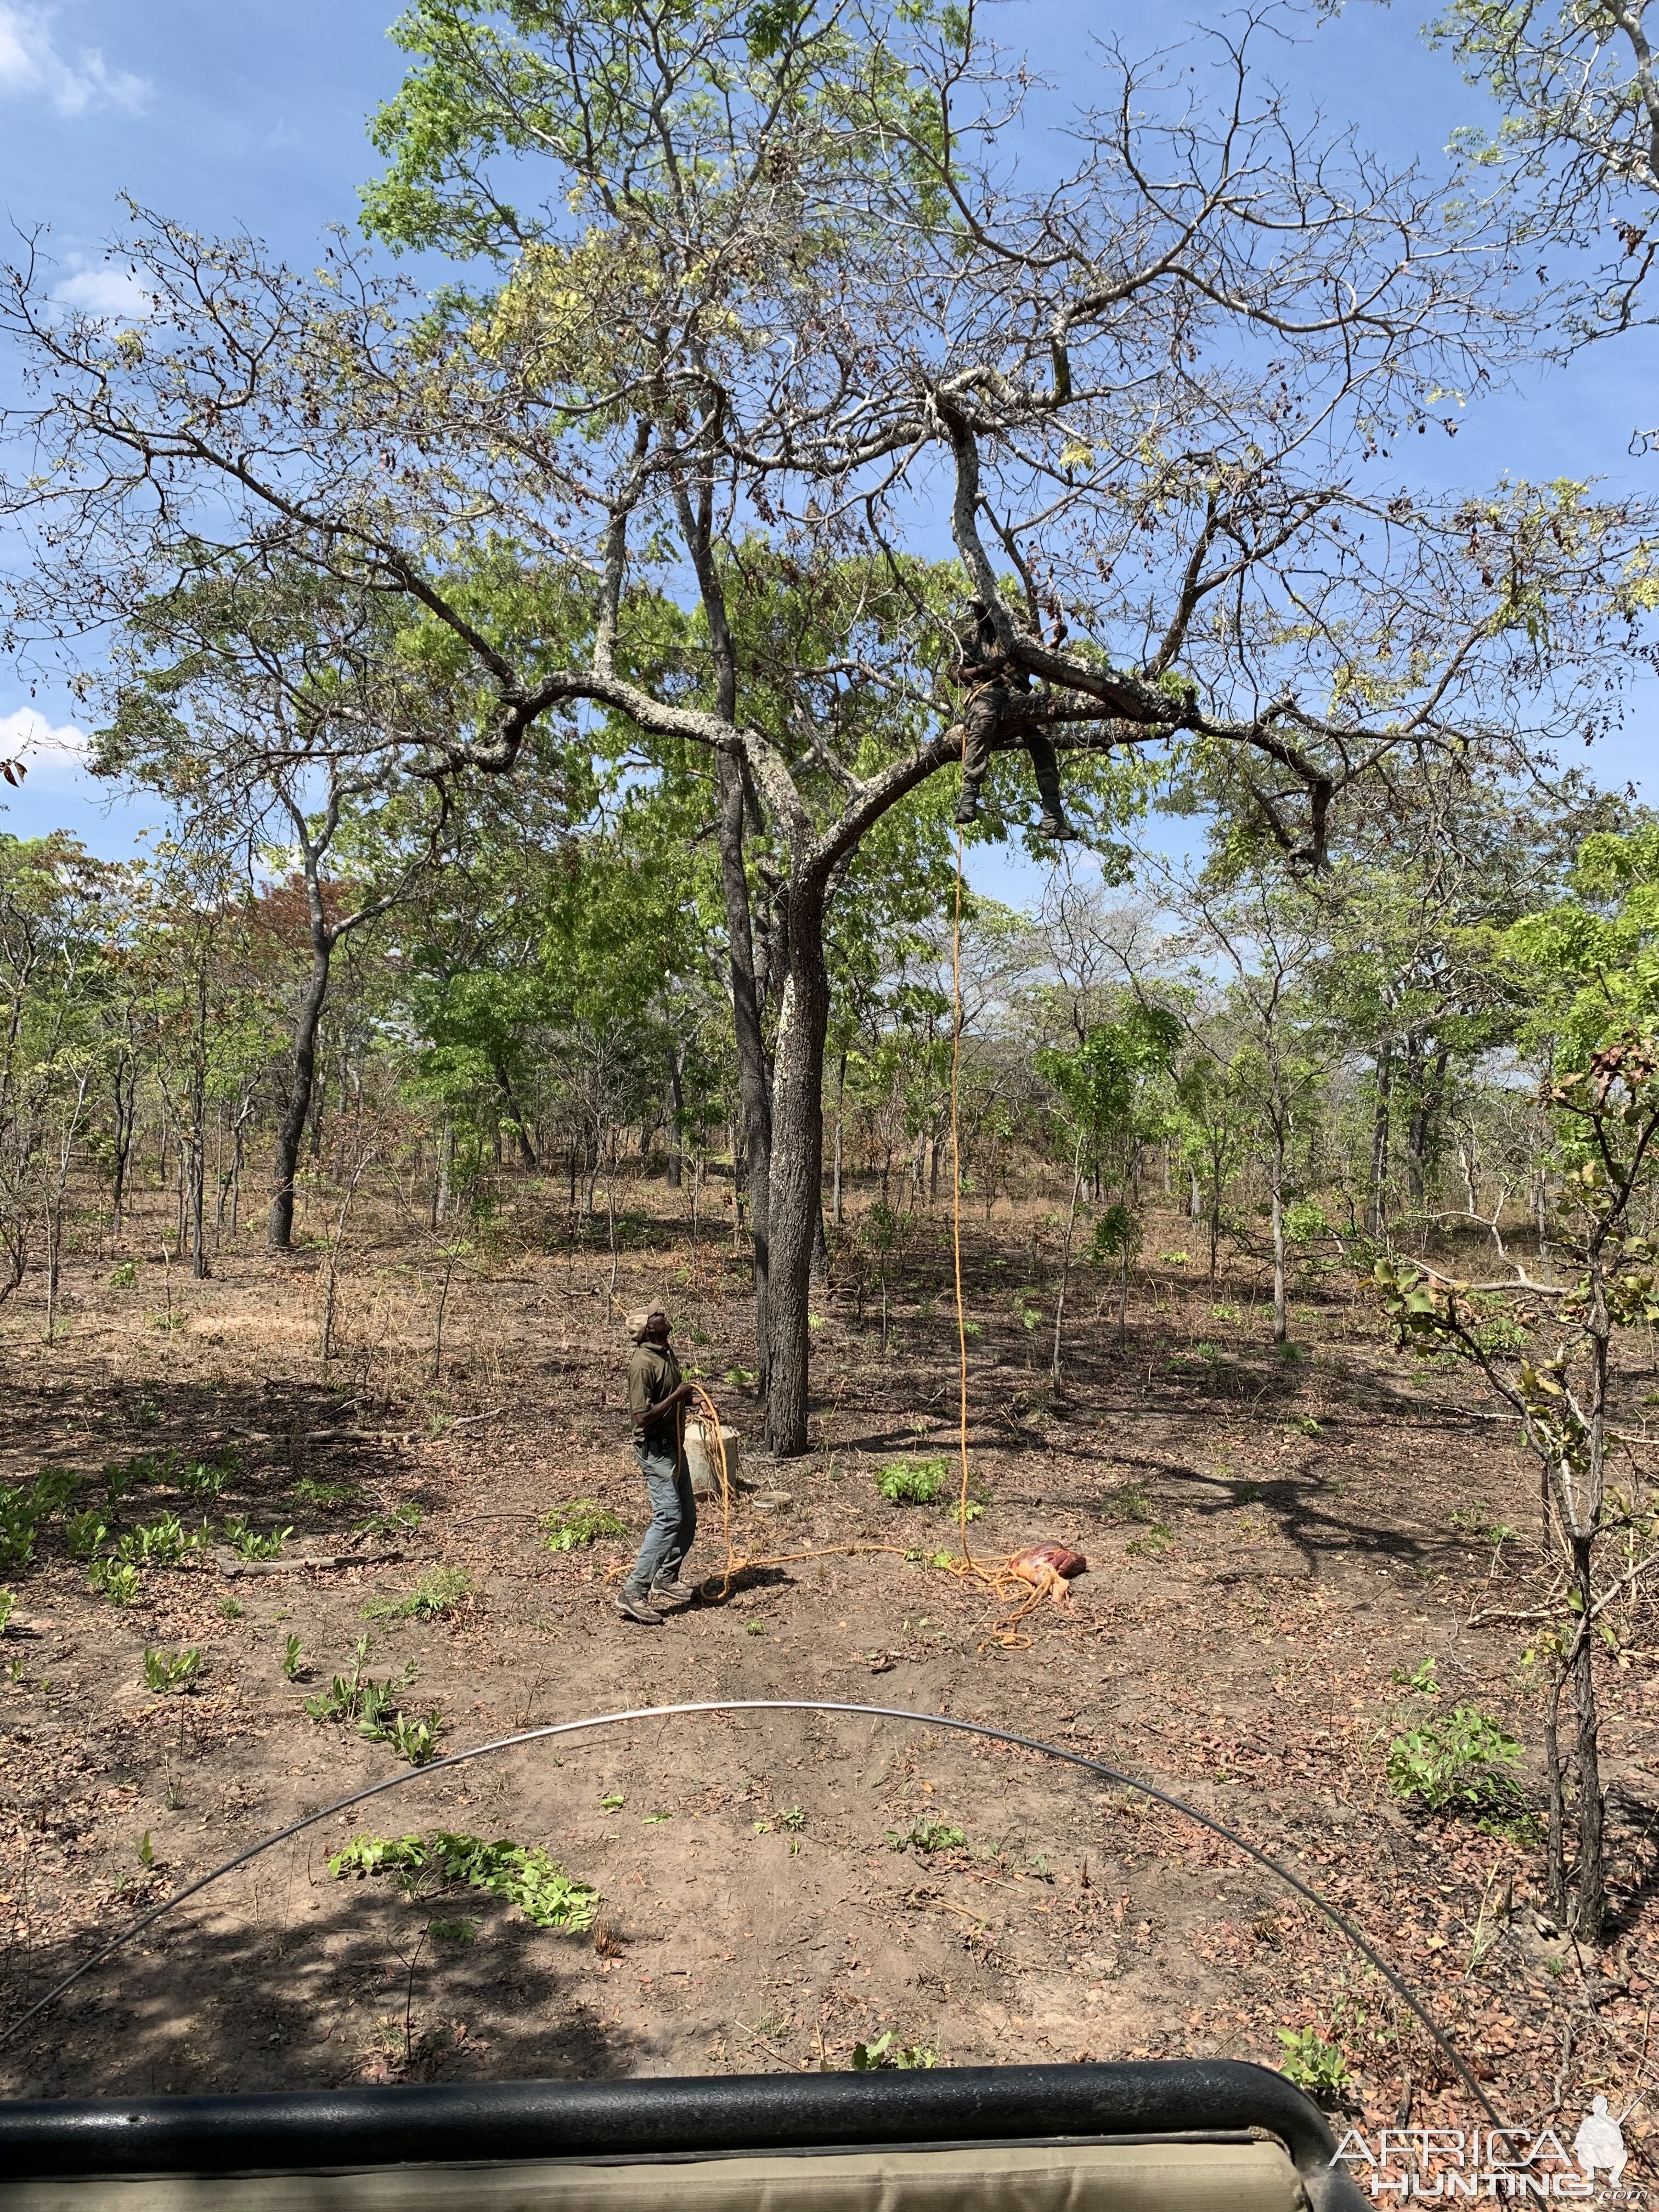 Putting up Leopard Bait Tanzania